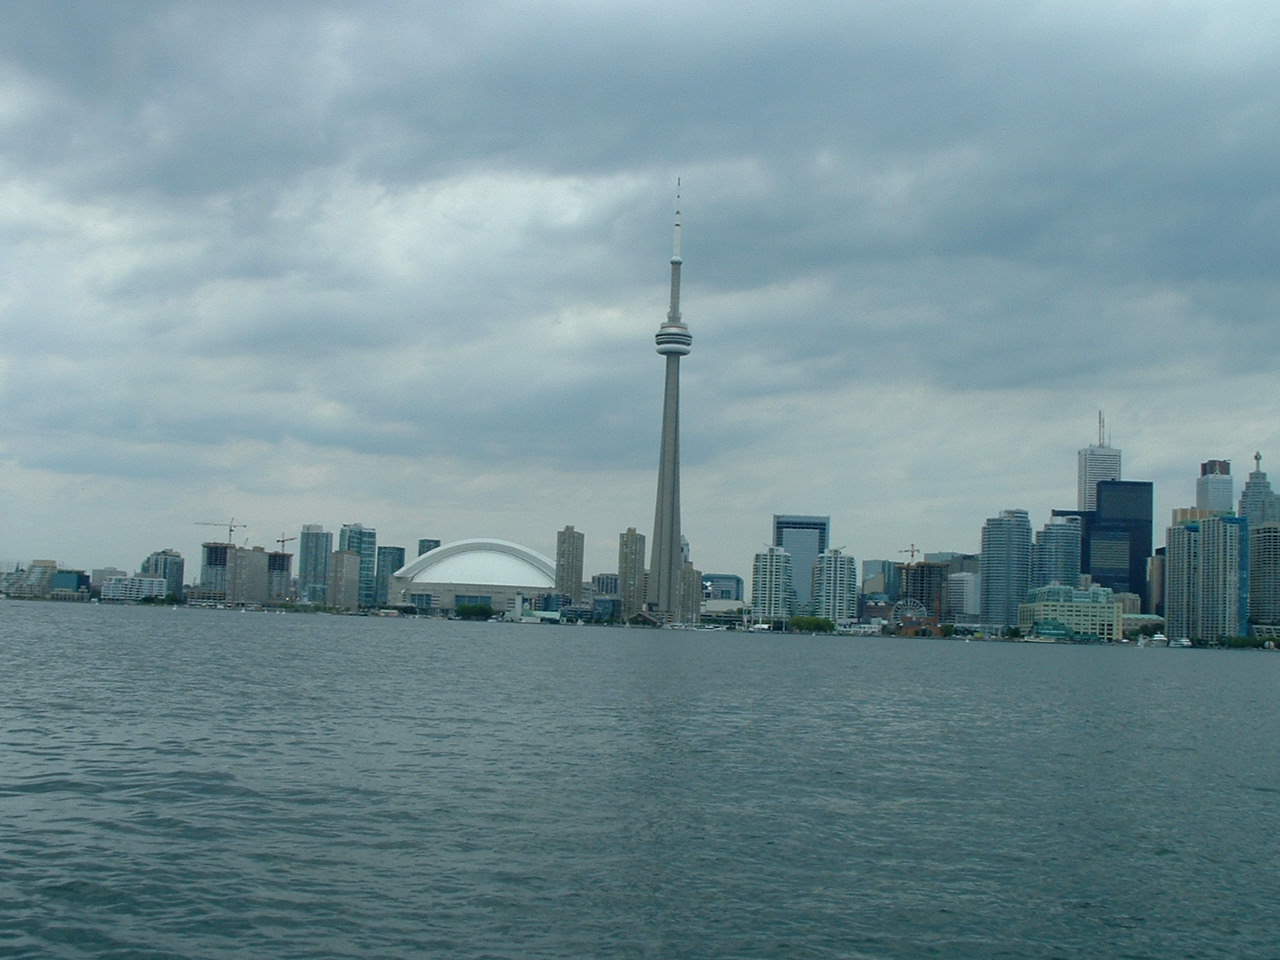 A view of Toronto, Canada